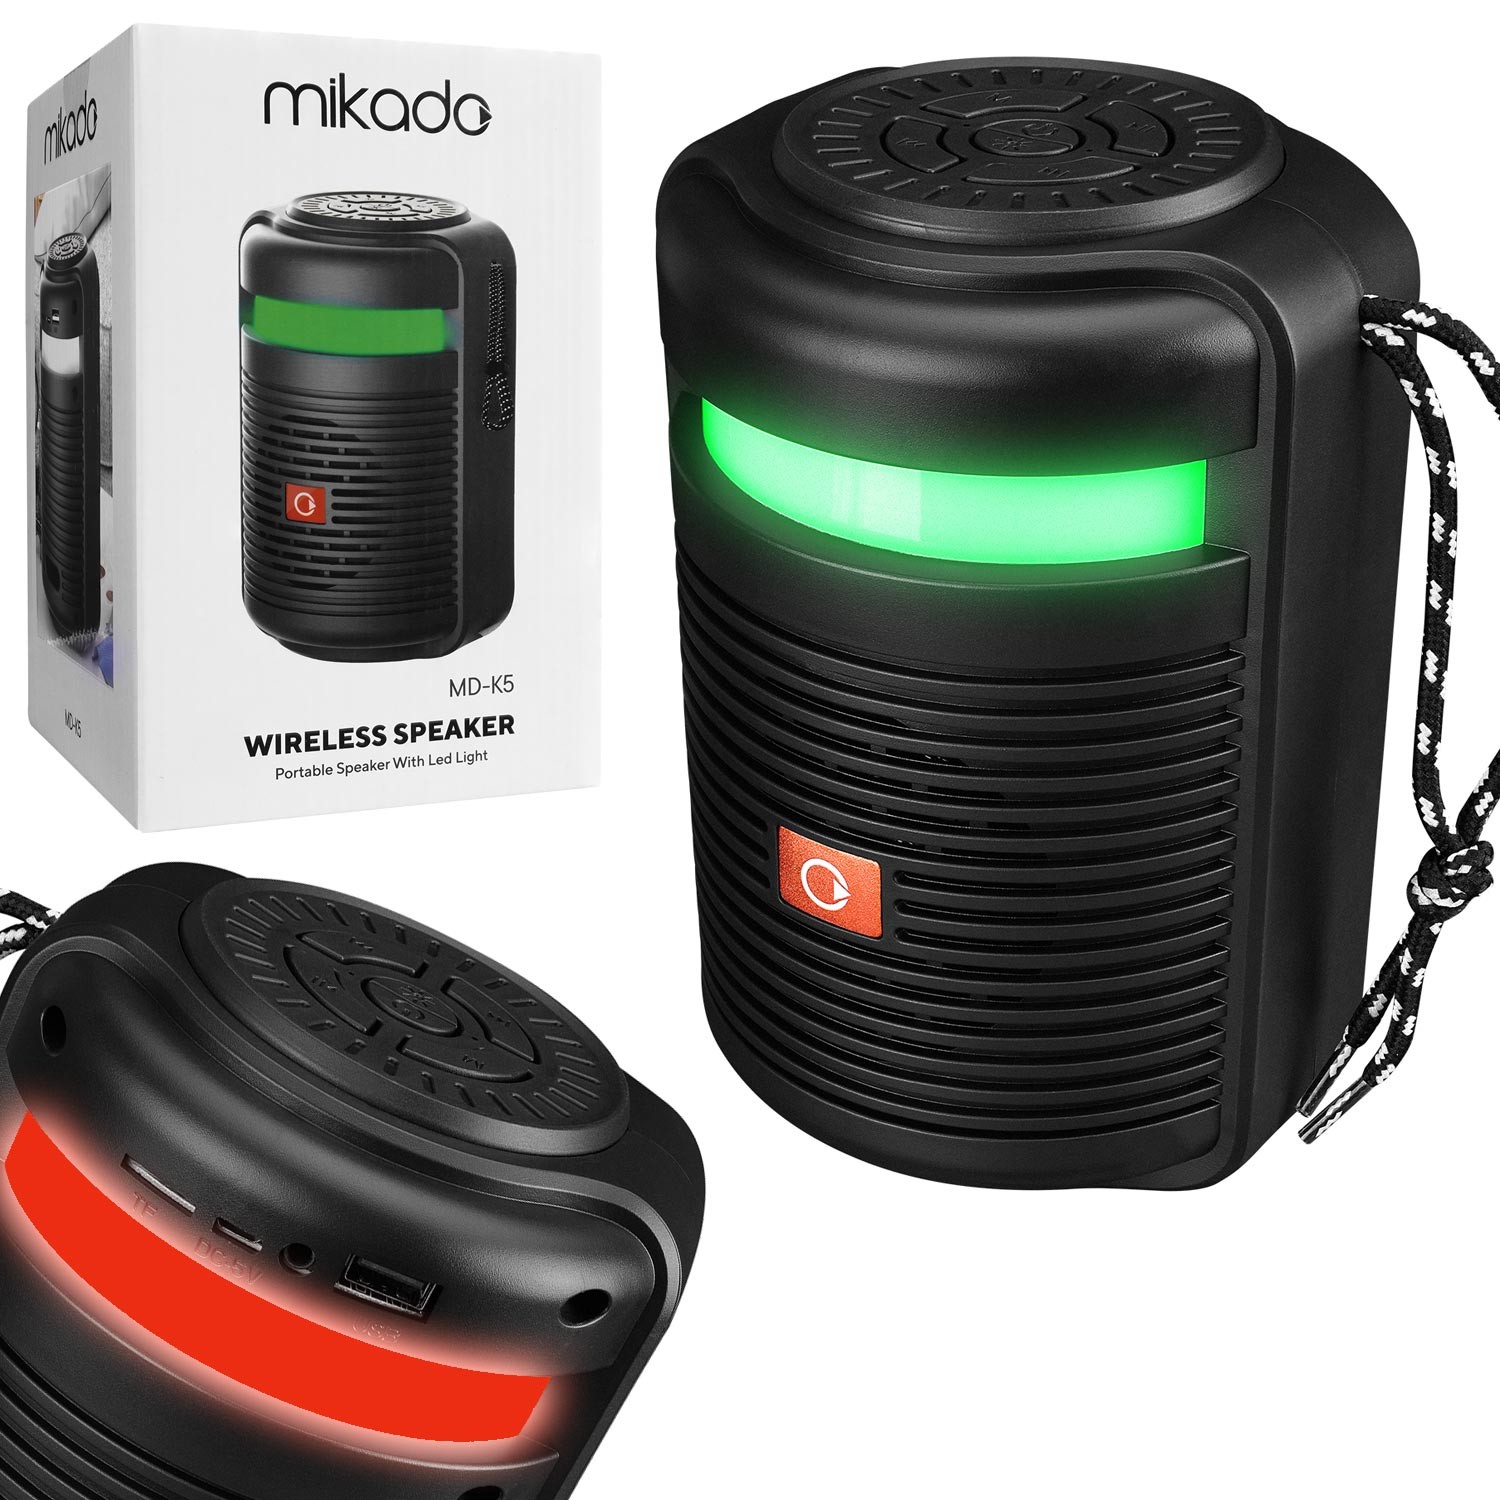 MÜZIK KUTUSU RGB LED SARJLI BT/USB/SD/AUX MIKADO MD-K5